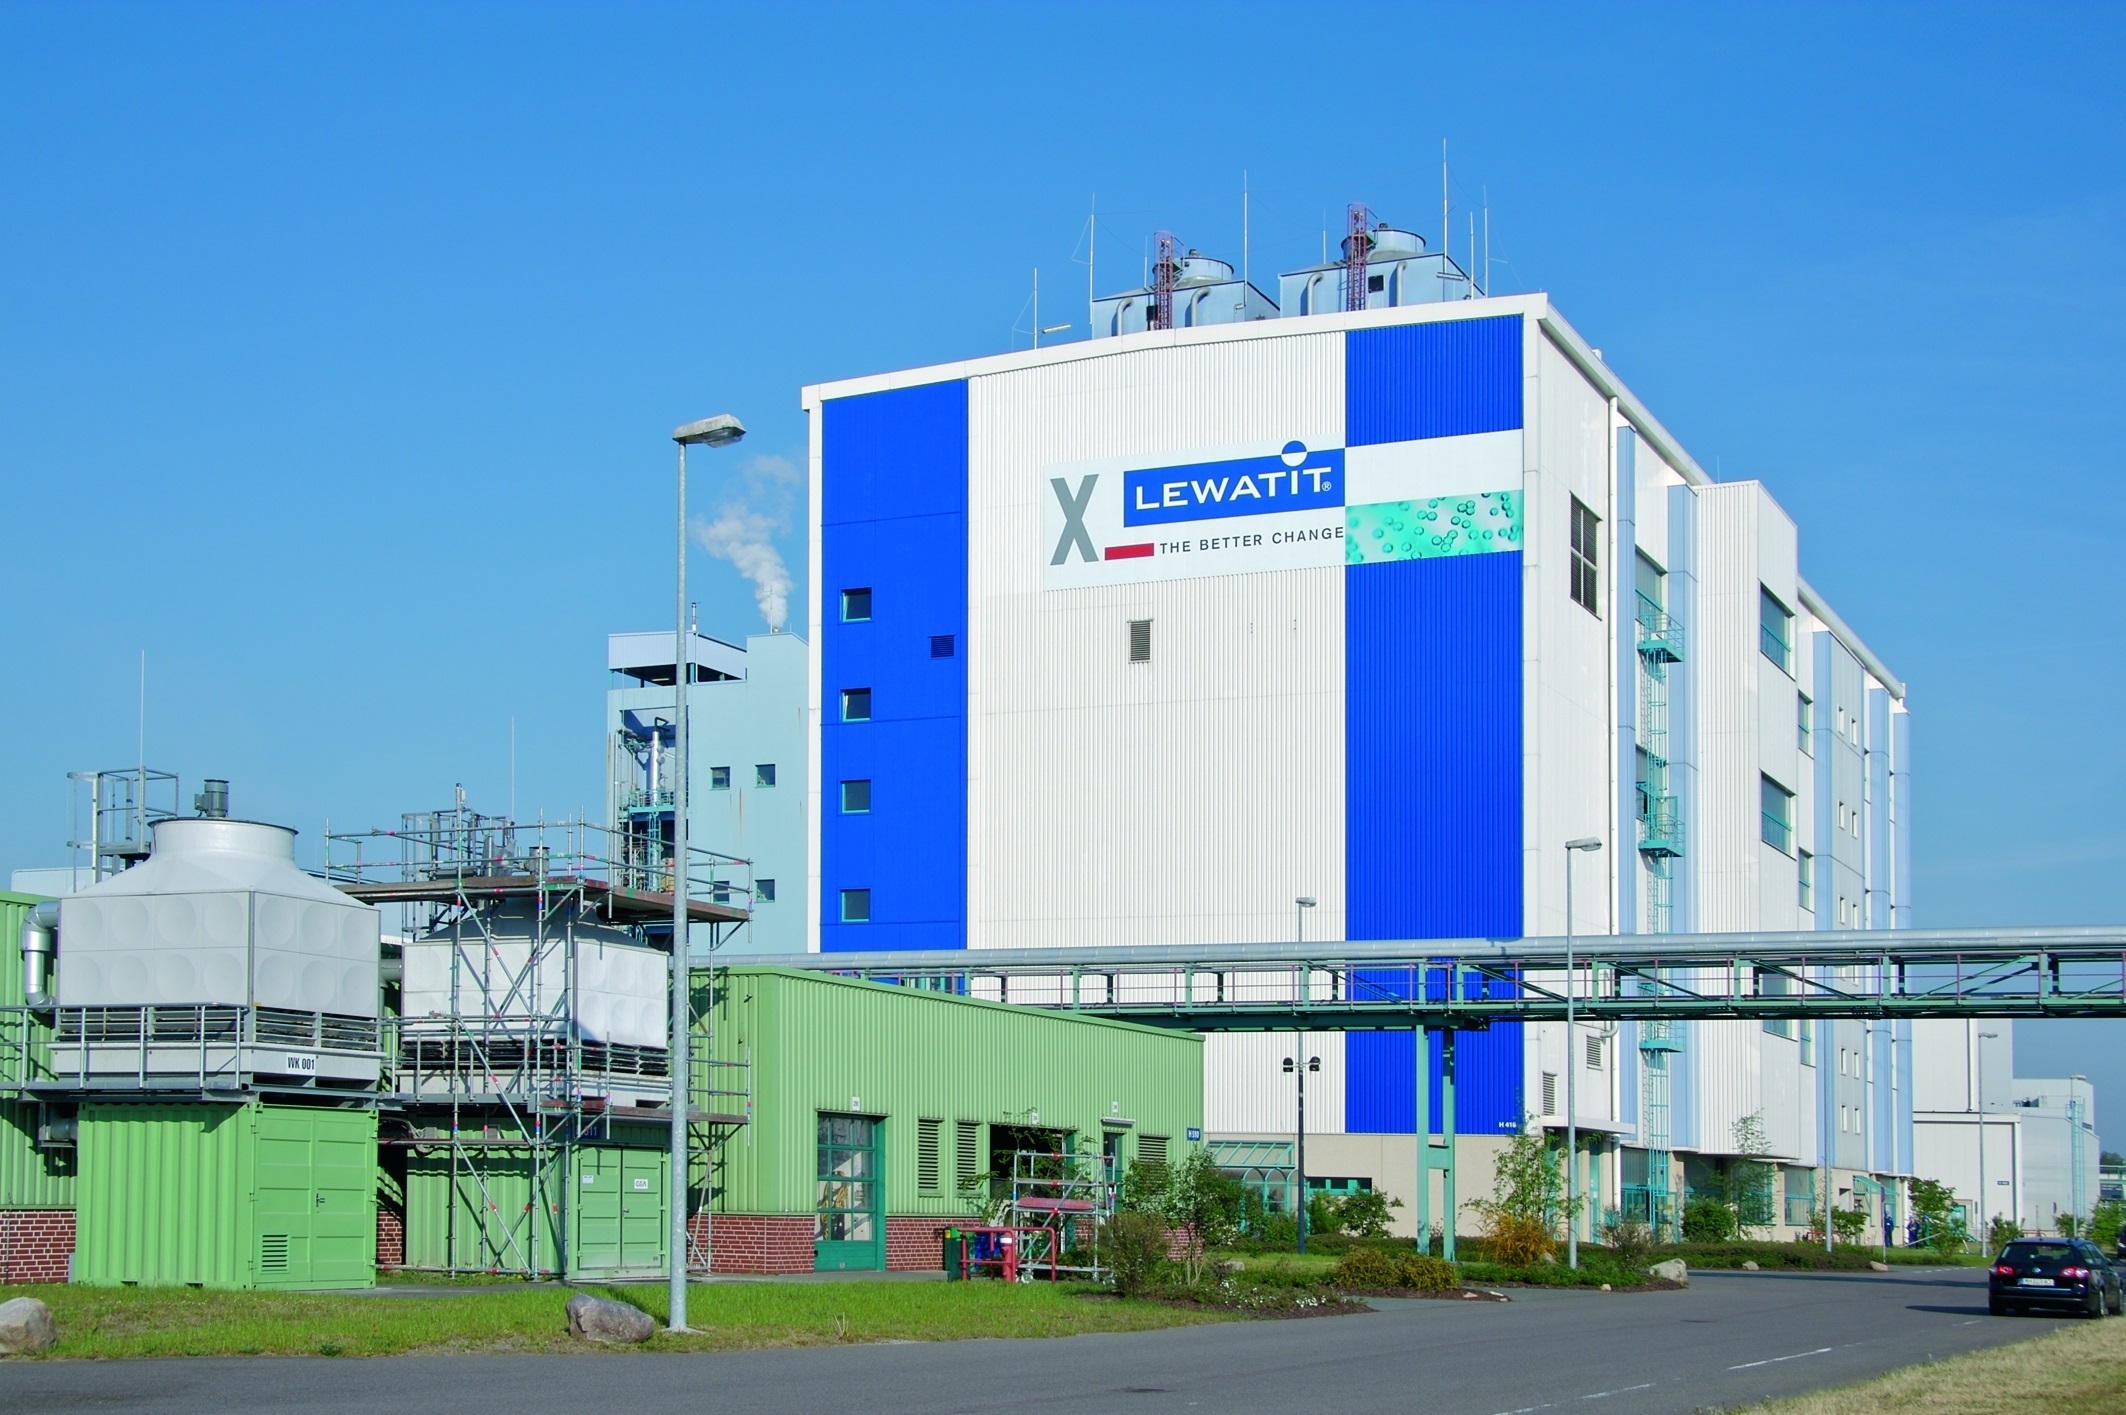 The Lanxess plant in Bitterfeld, Germany.